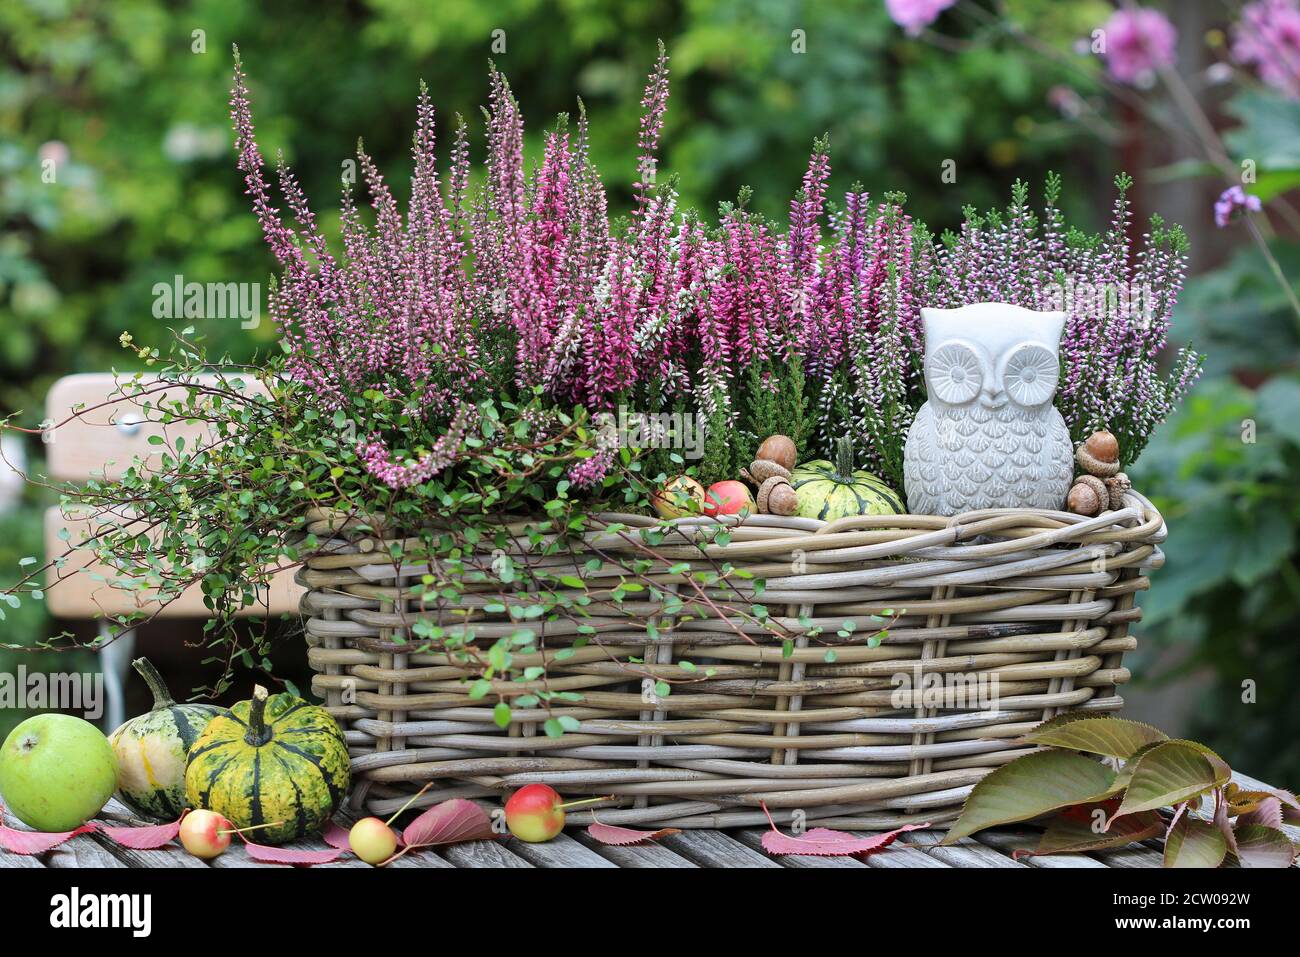 pink heather flowers in baket as autumn garden decoration Stock Photo